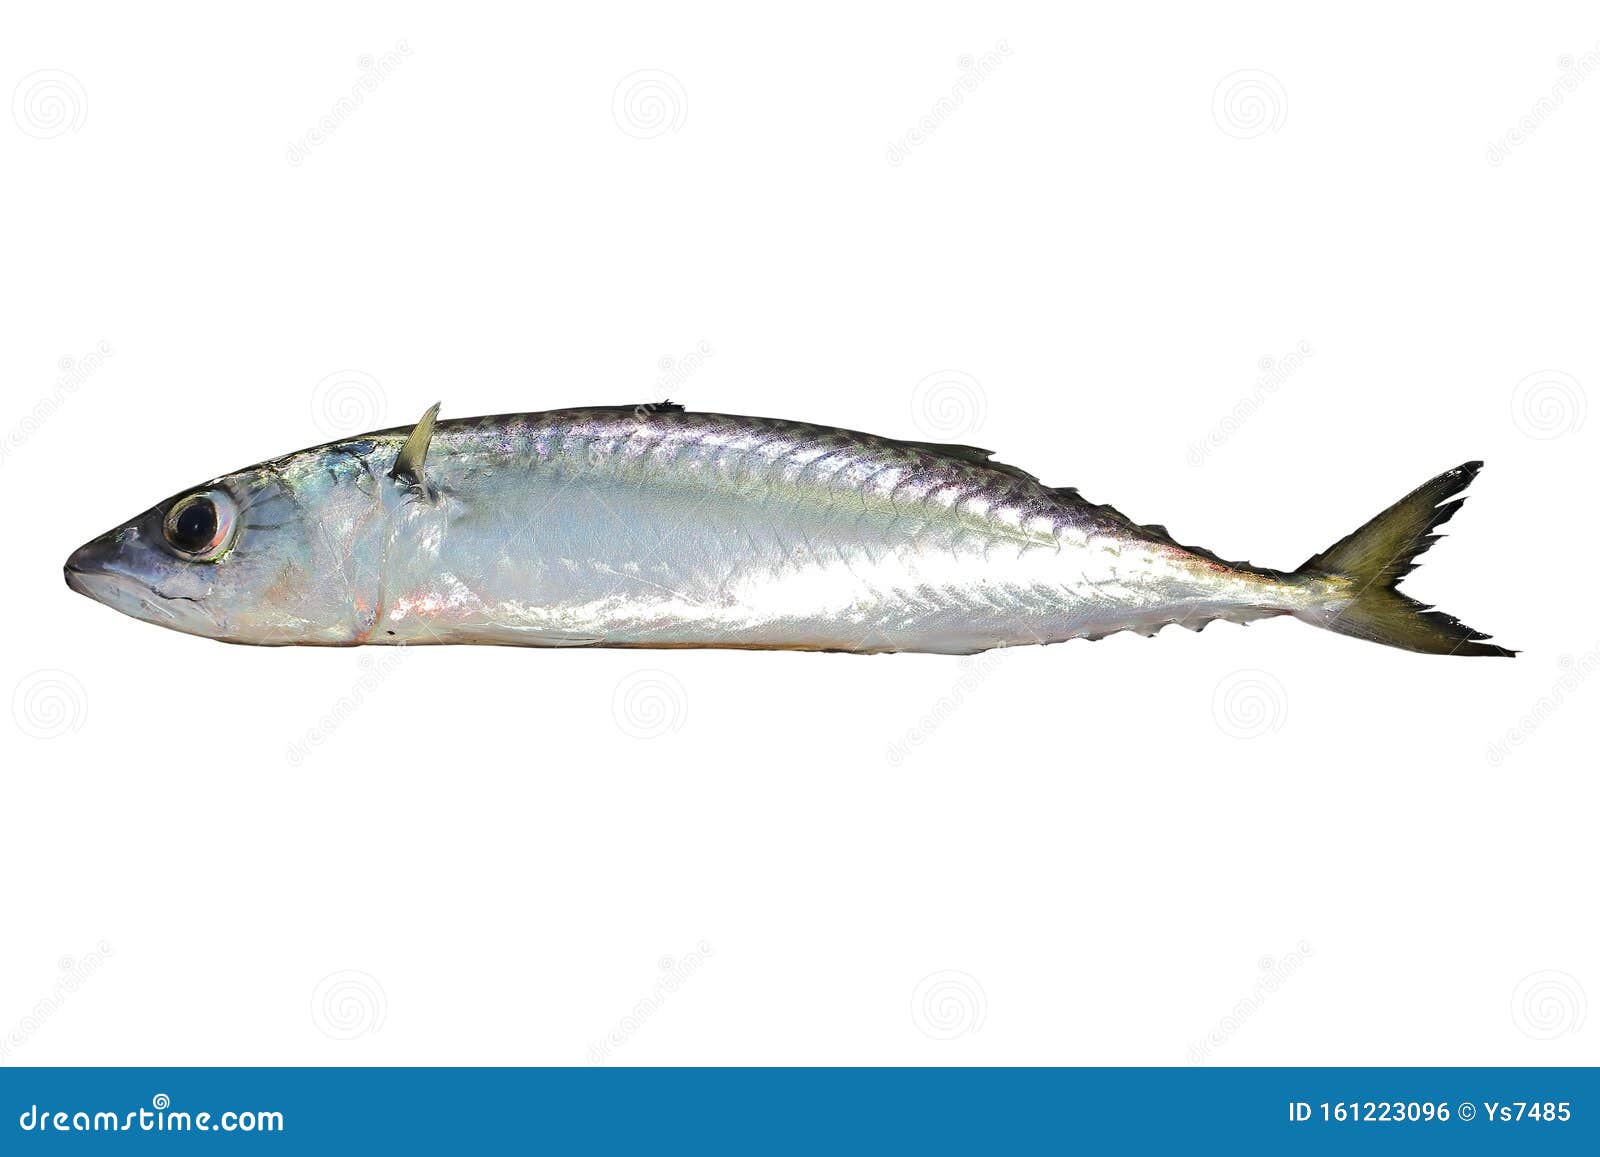 https://thumbs.dreamstime.com/z/chub-mackerel-pacific-mackerel-pacific-chub-mackerel-scomber-japonicus-fish-alive-isolated-white-background-chub-mackerel-161223096.jpg